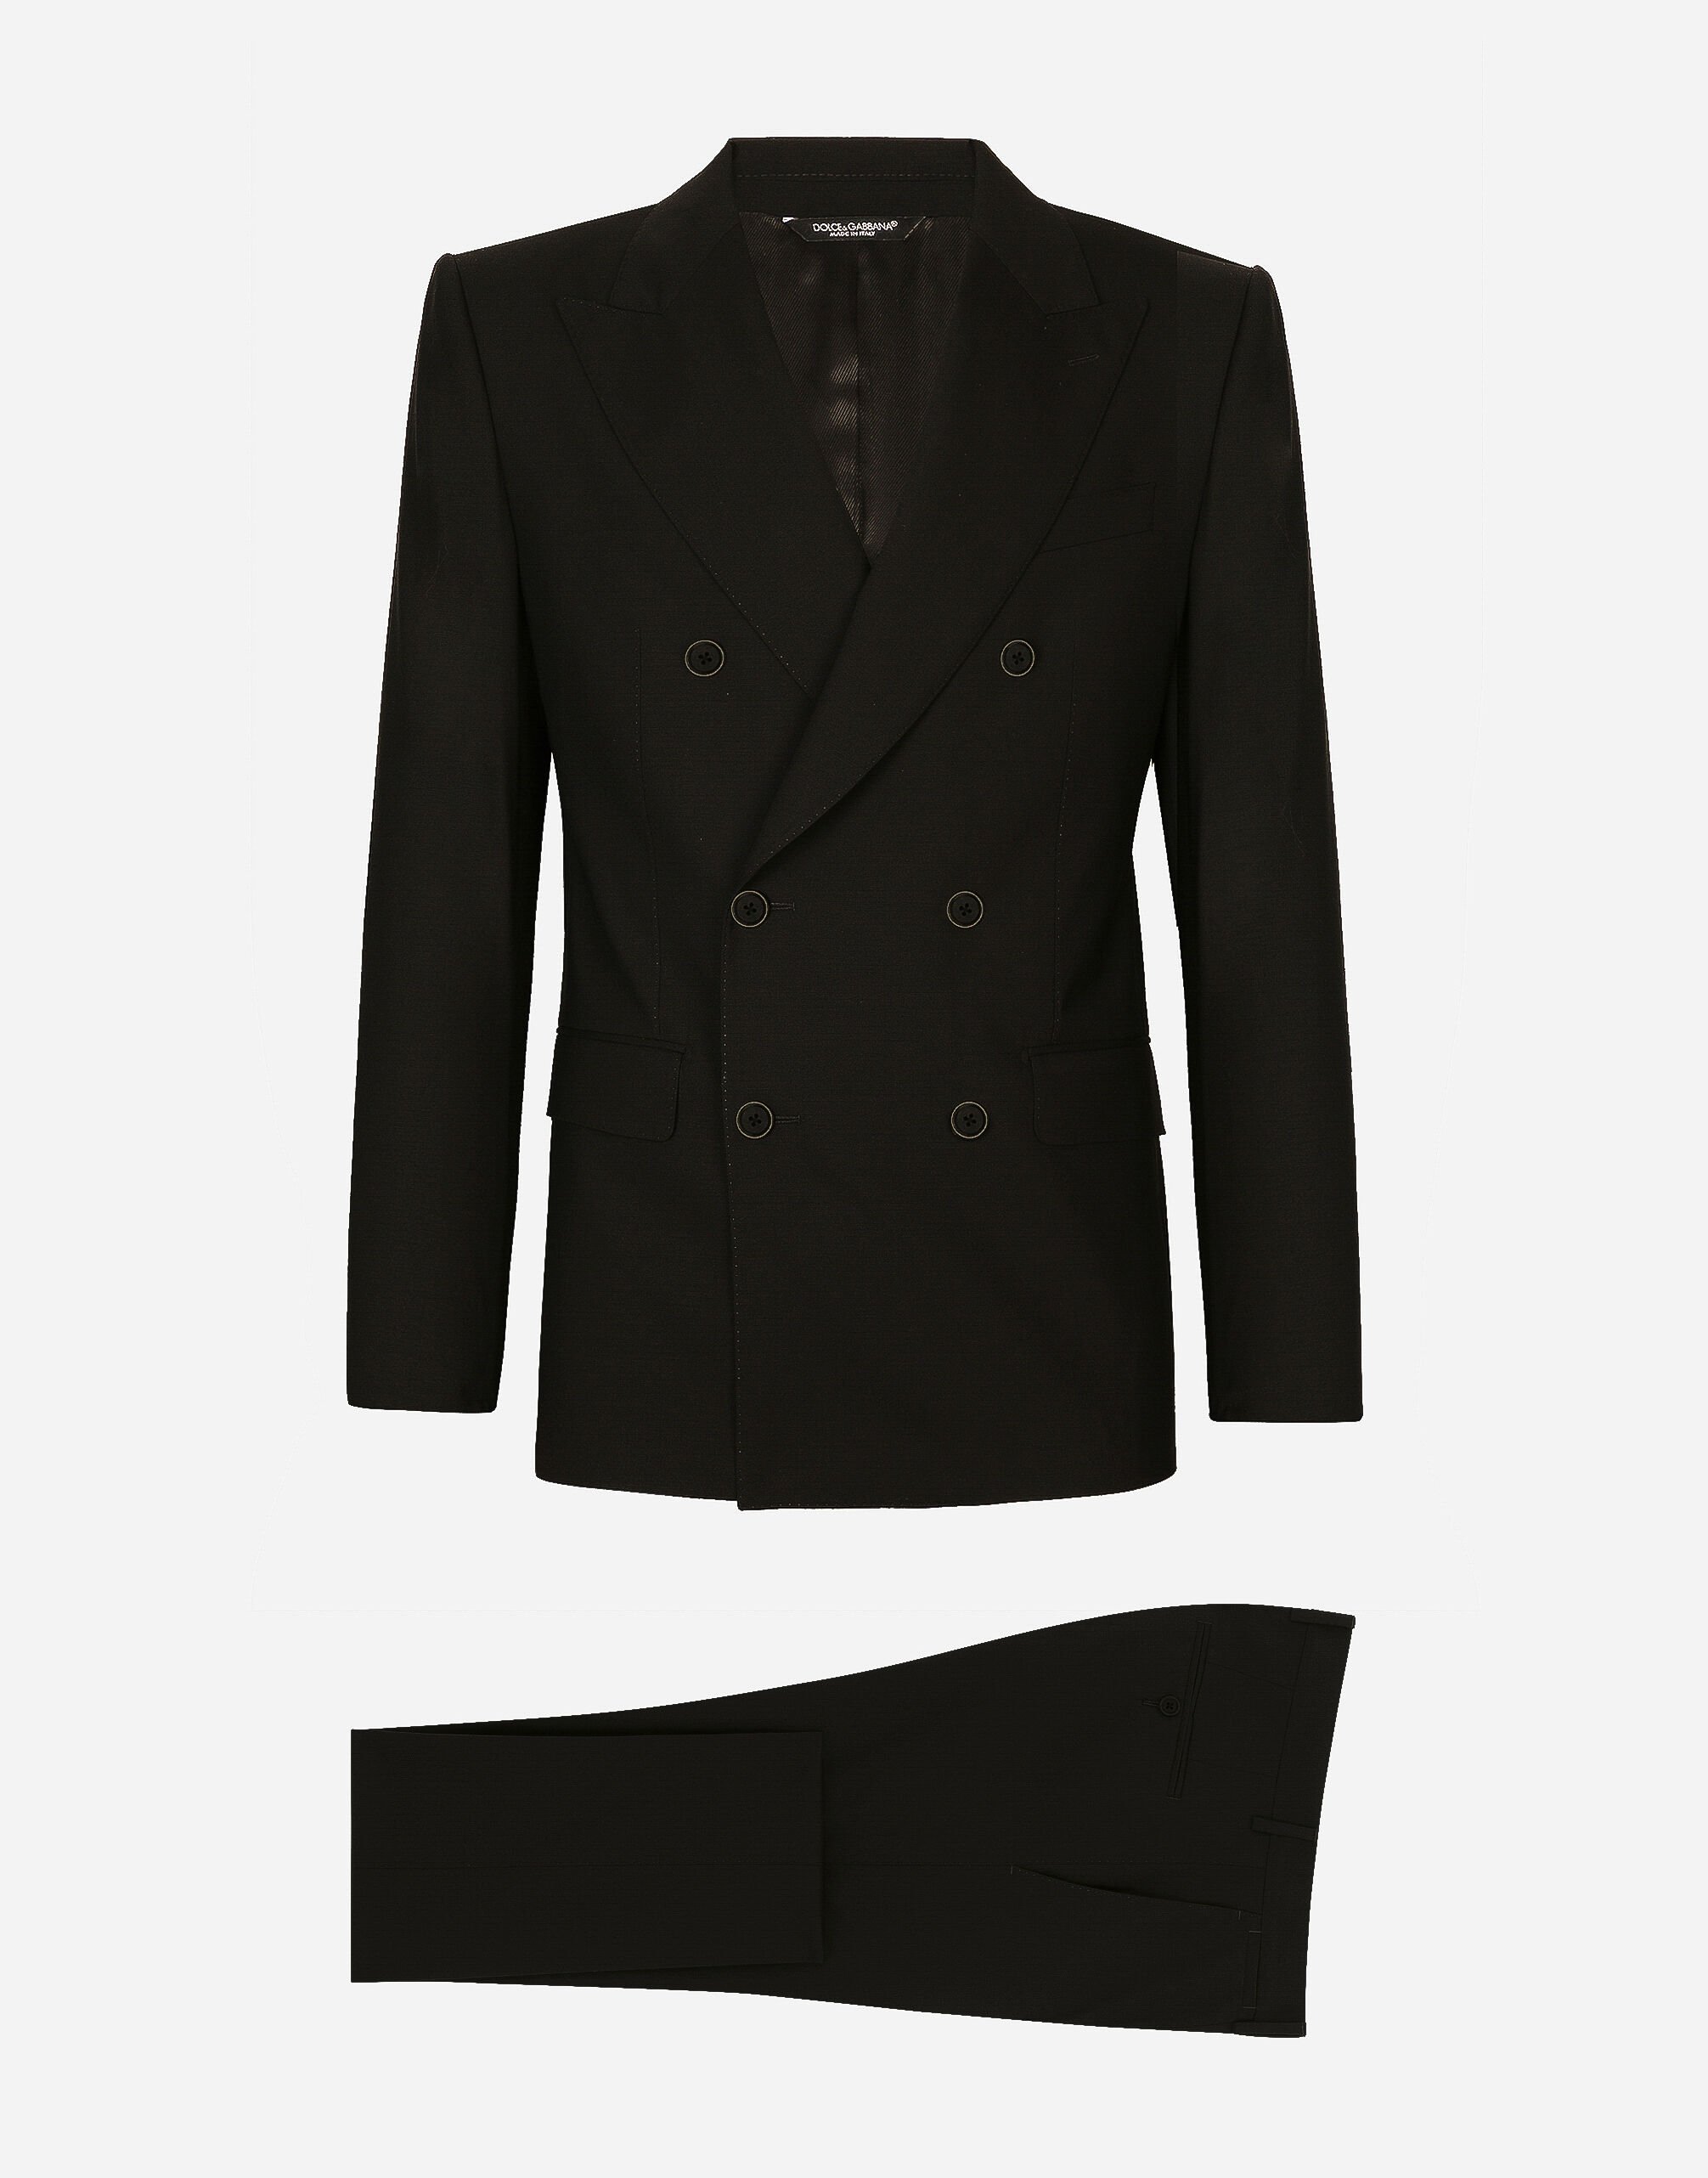 Dolce & Gabbana بدلة صوف مرن بصف أزرار مزدوج وقصة سيسيلي أسود GK0RMTGG059